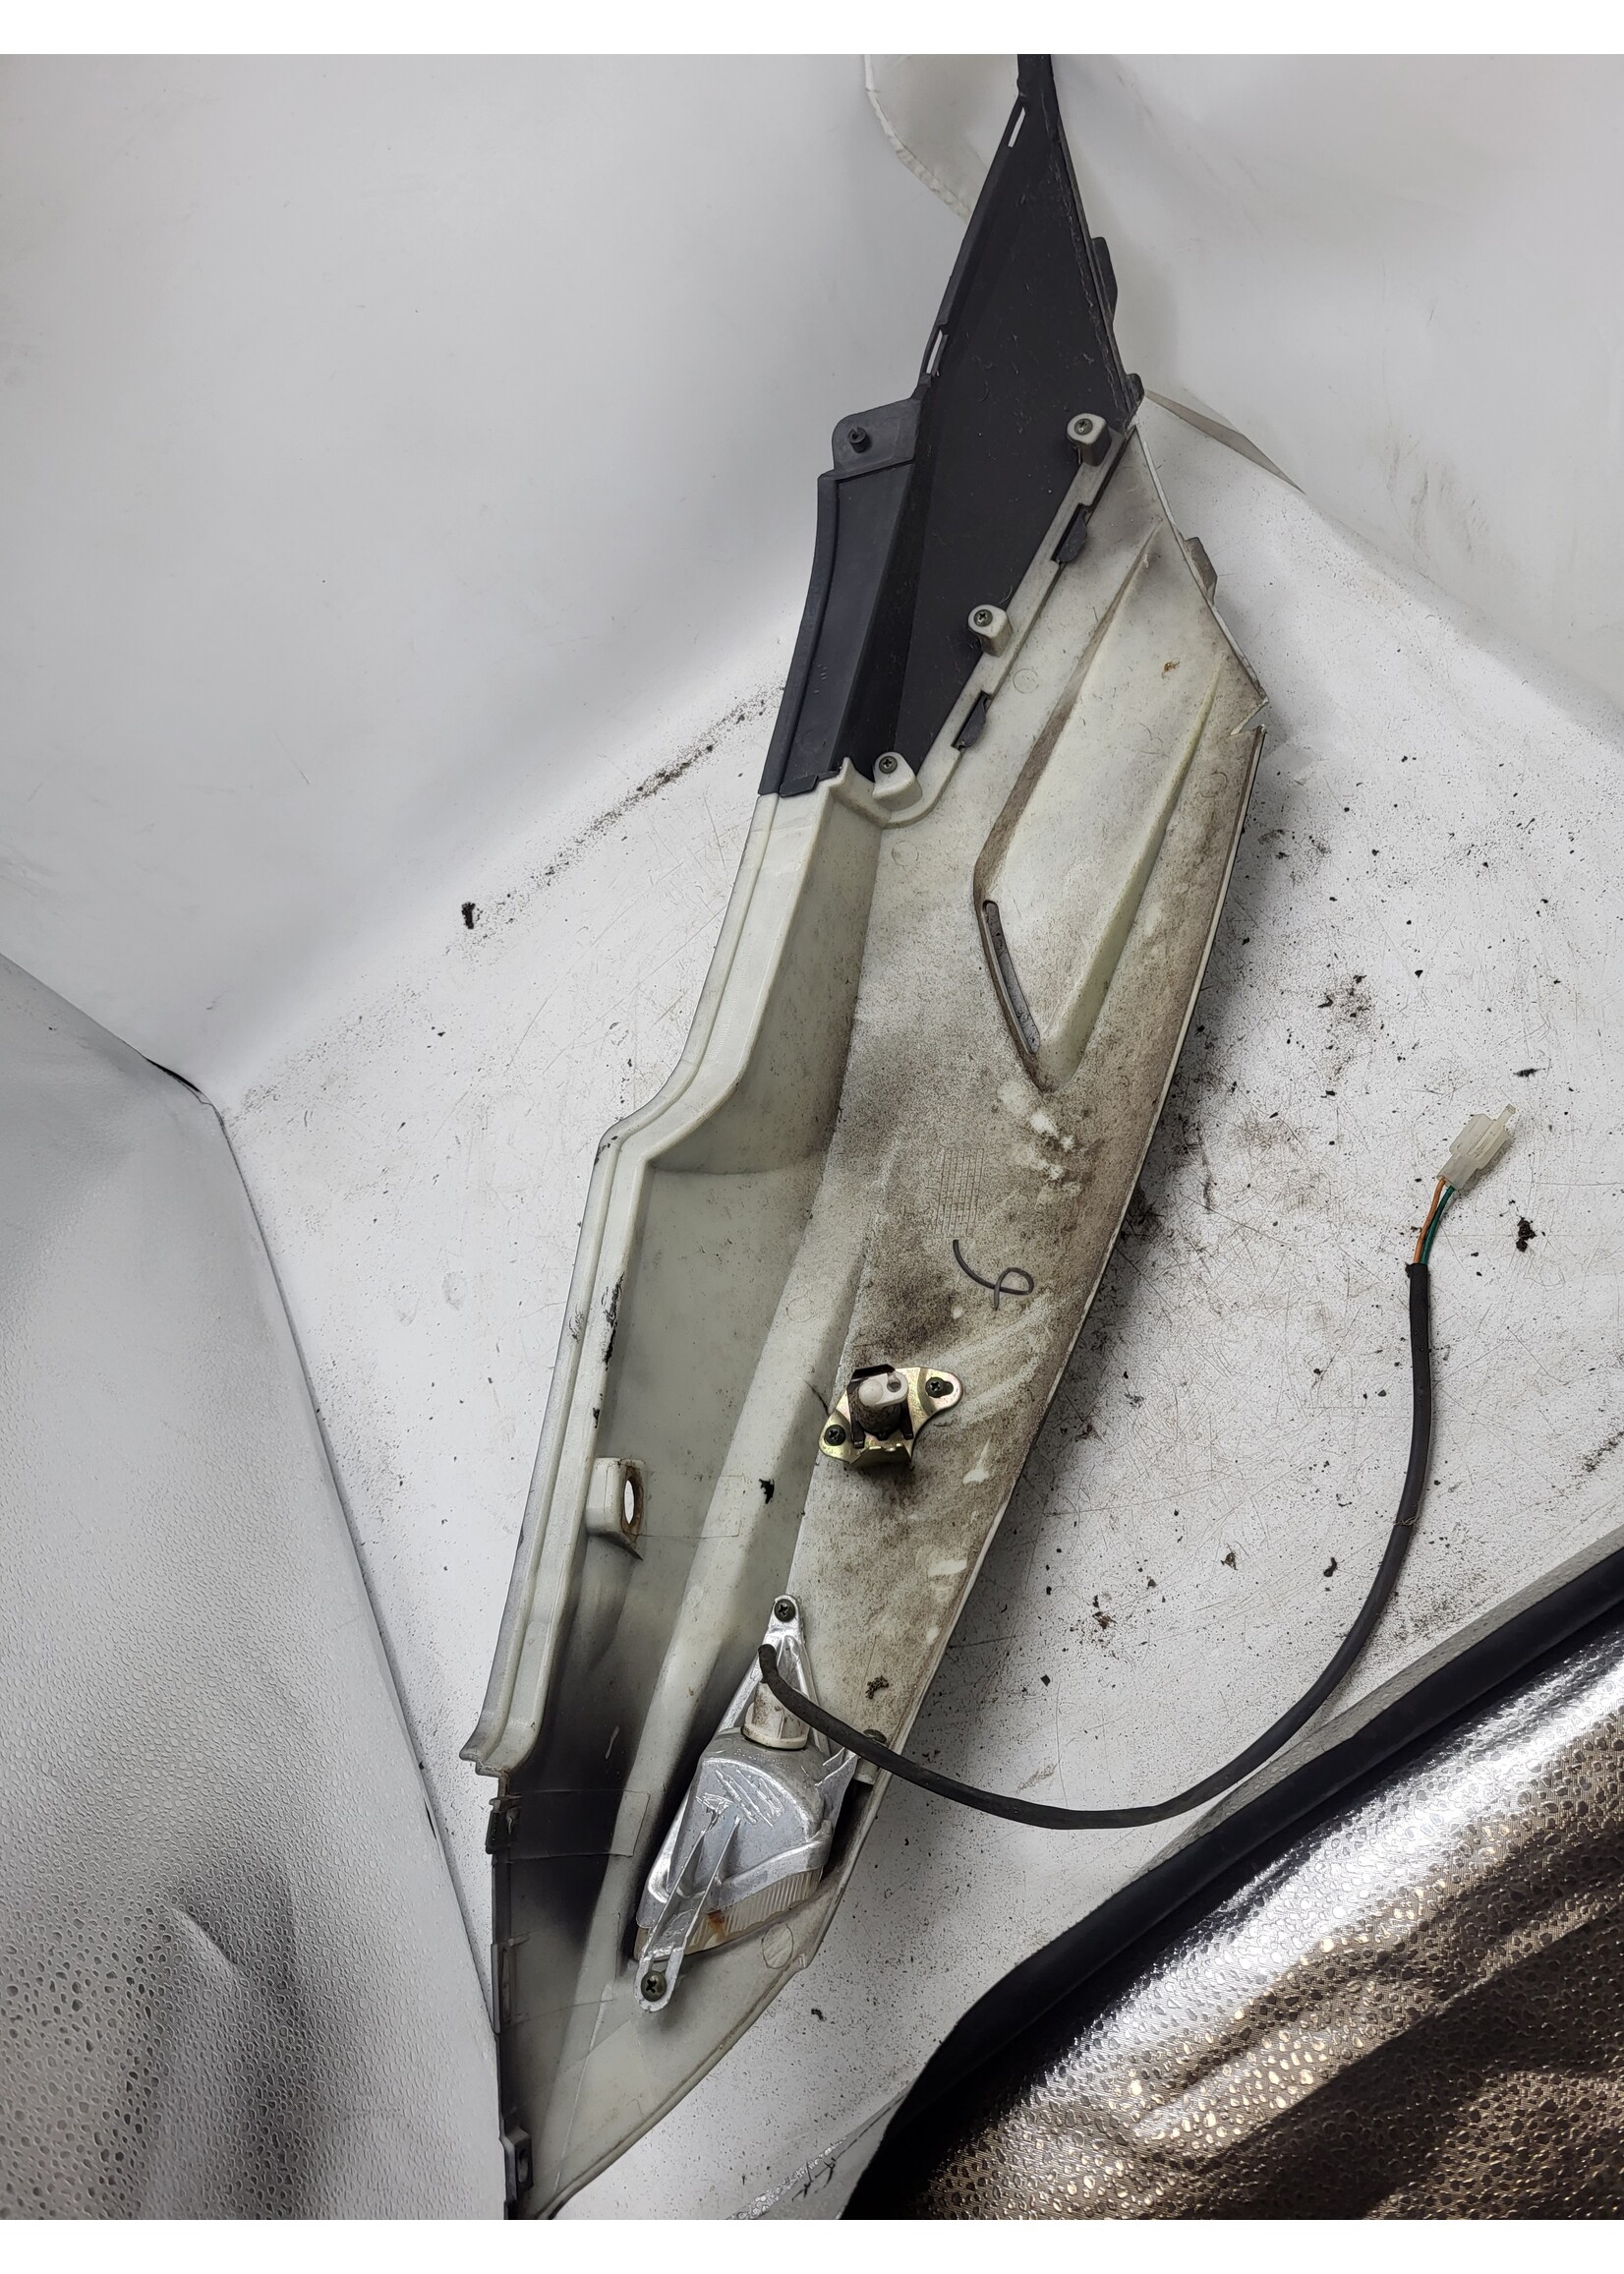 Znen Znen F22 2015 ZN50QT-32 / Zijscherm Links klein stukje afgebroken zie foto